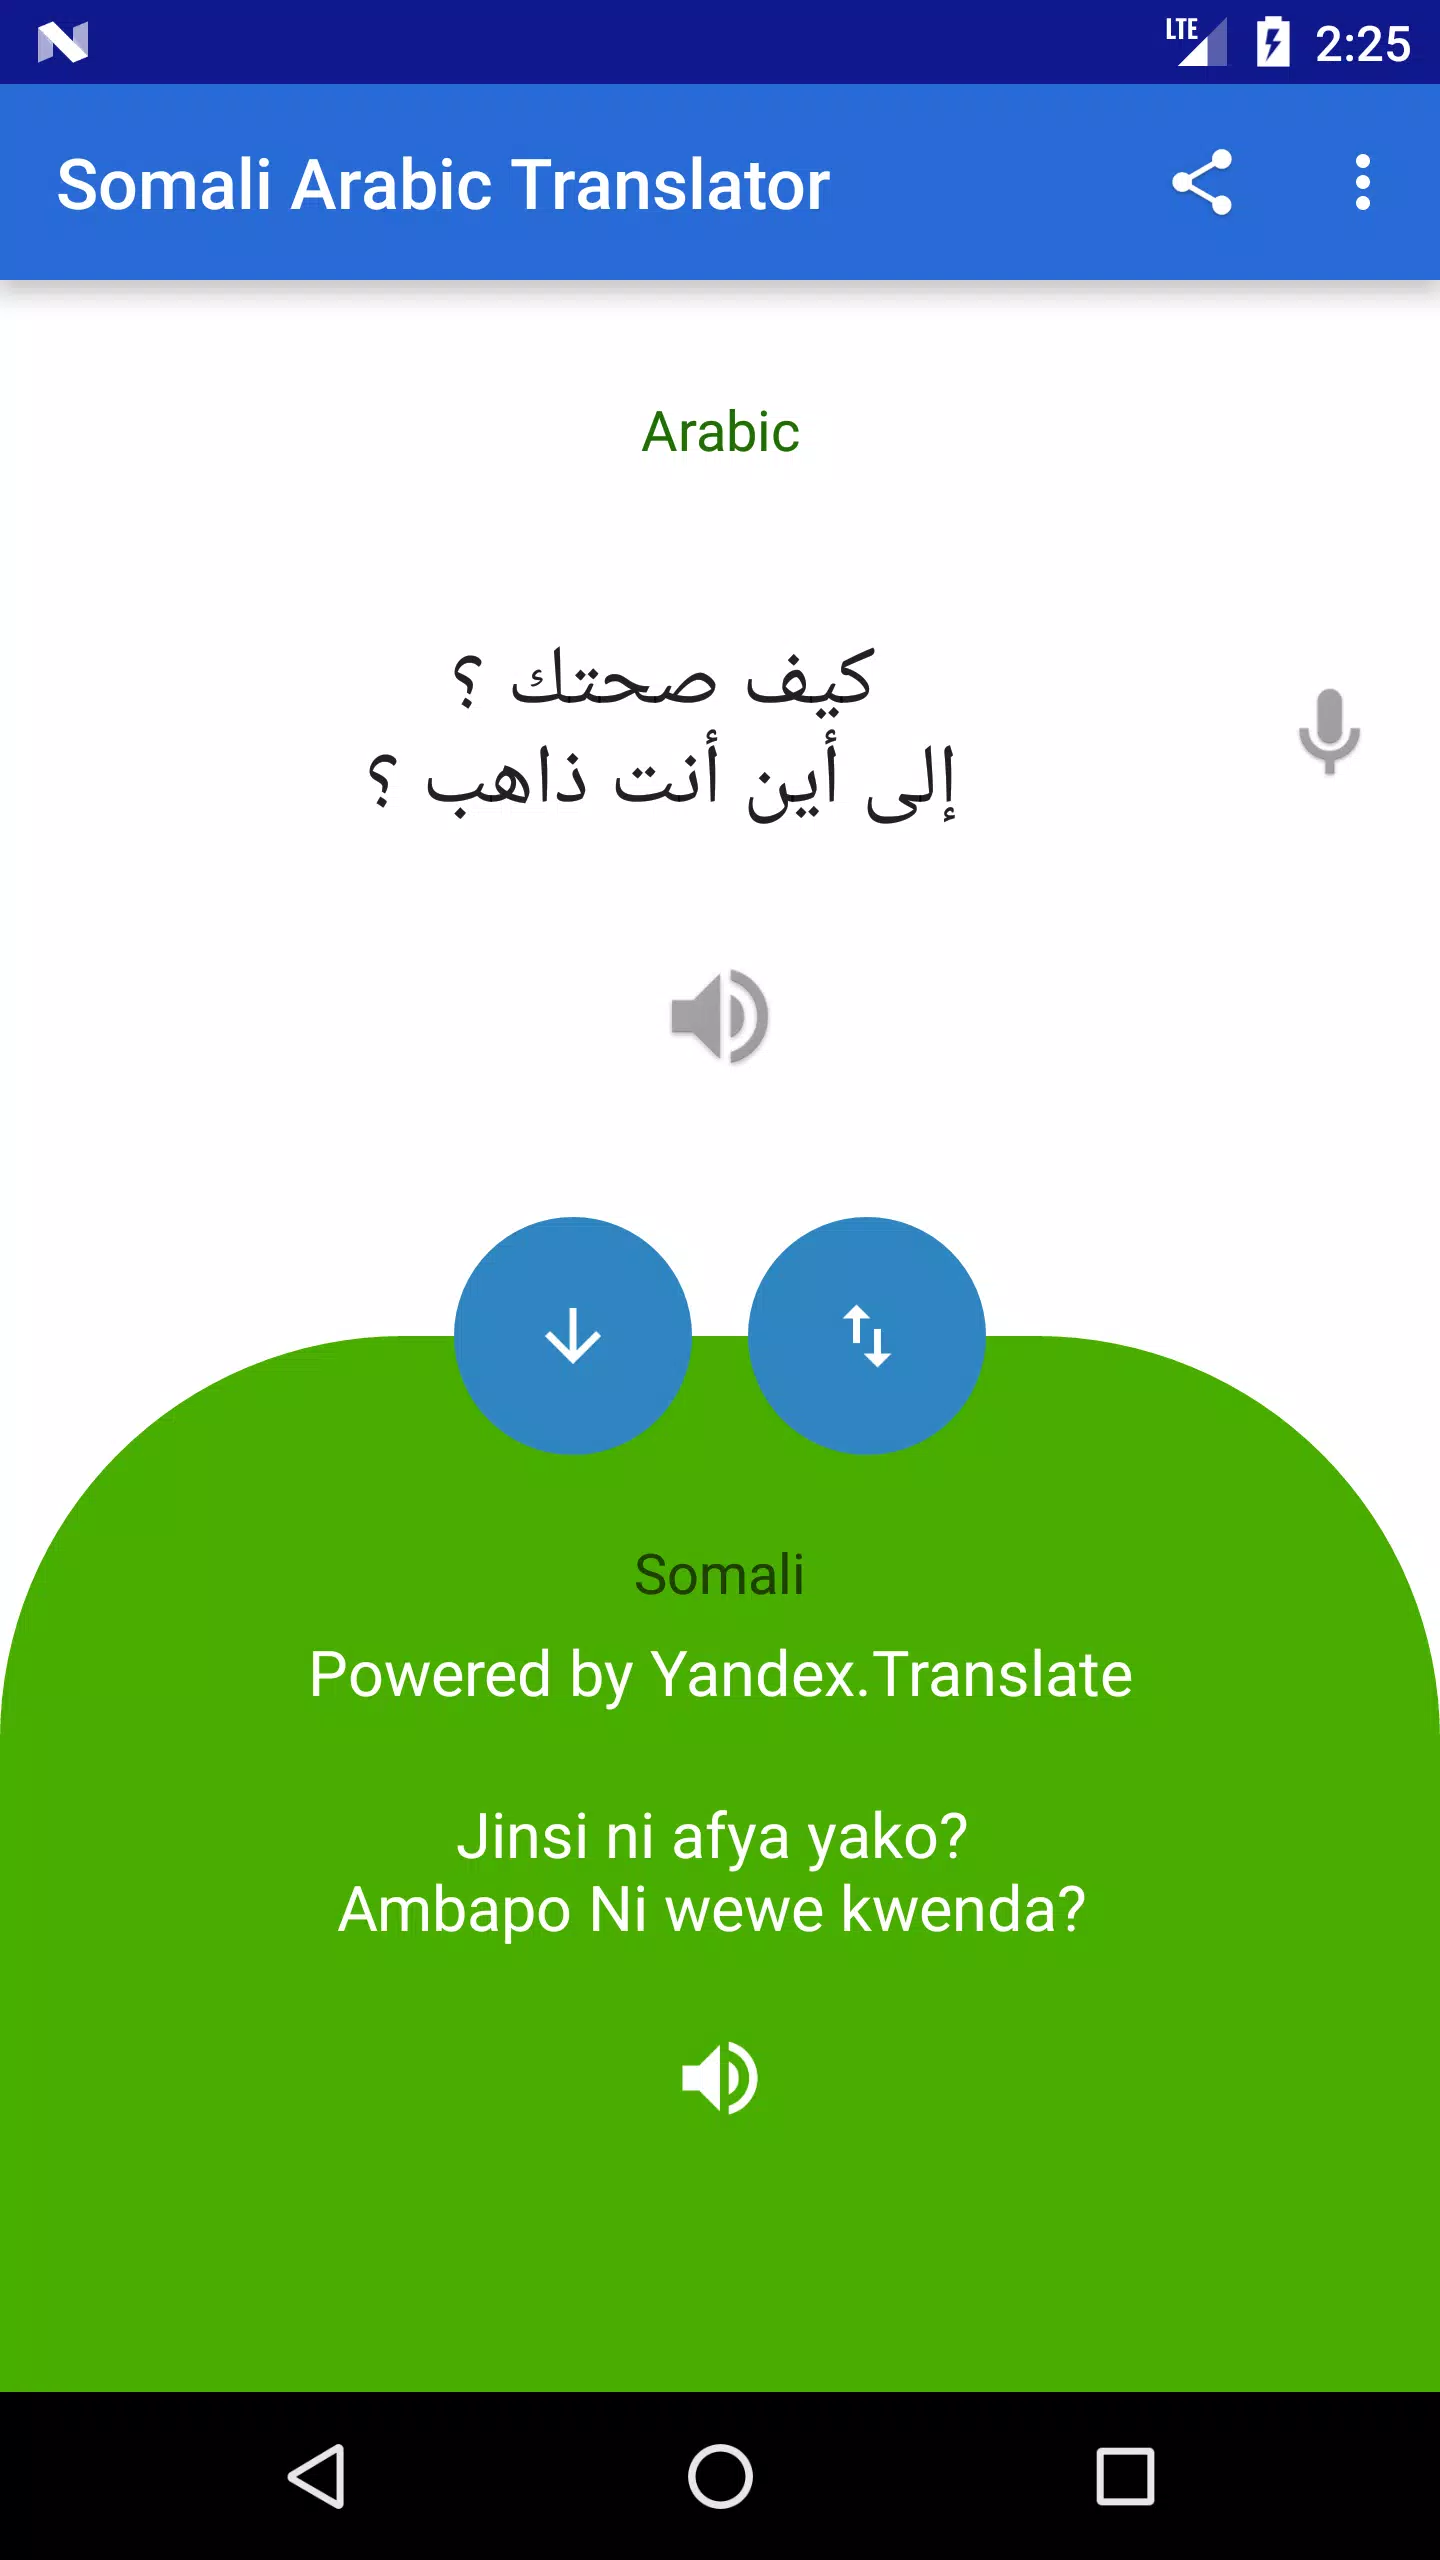 Somali Arabic Translator Apk For Android Download